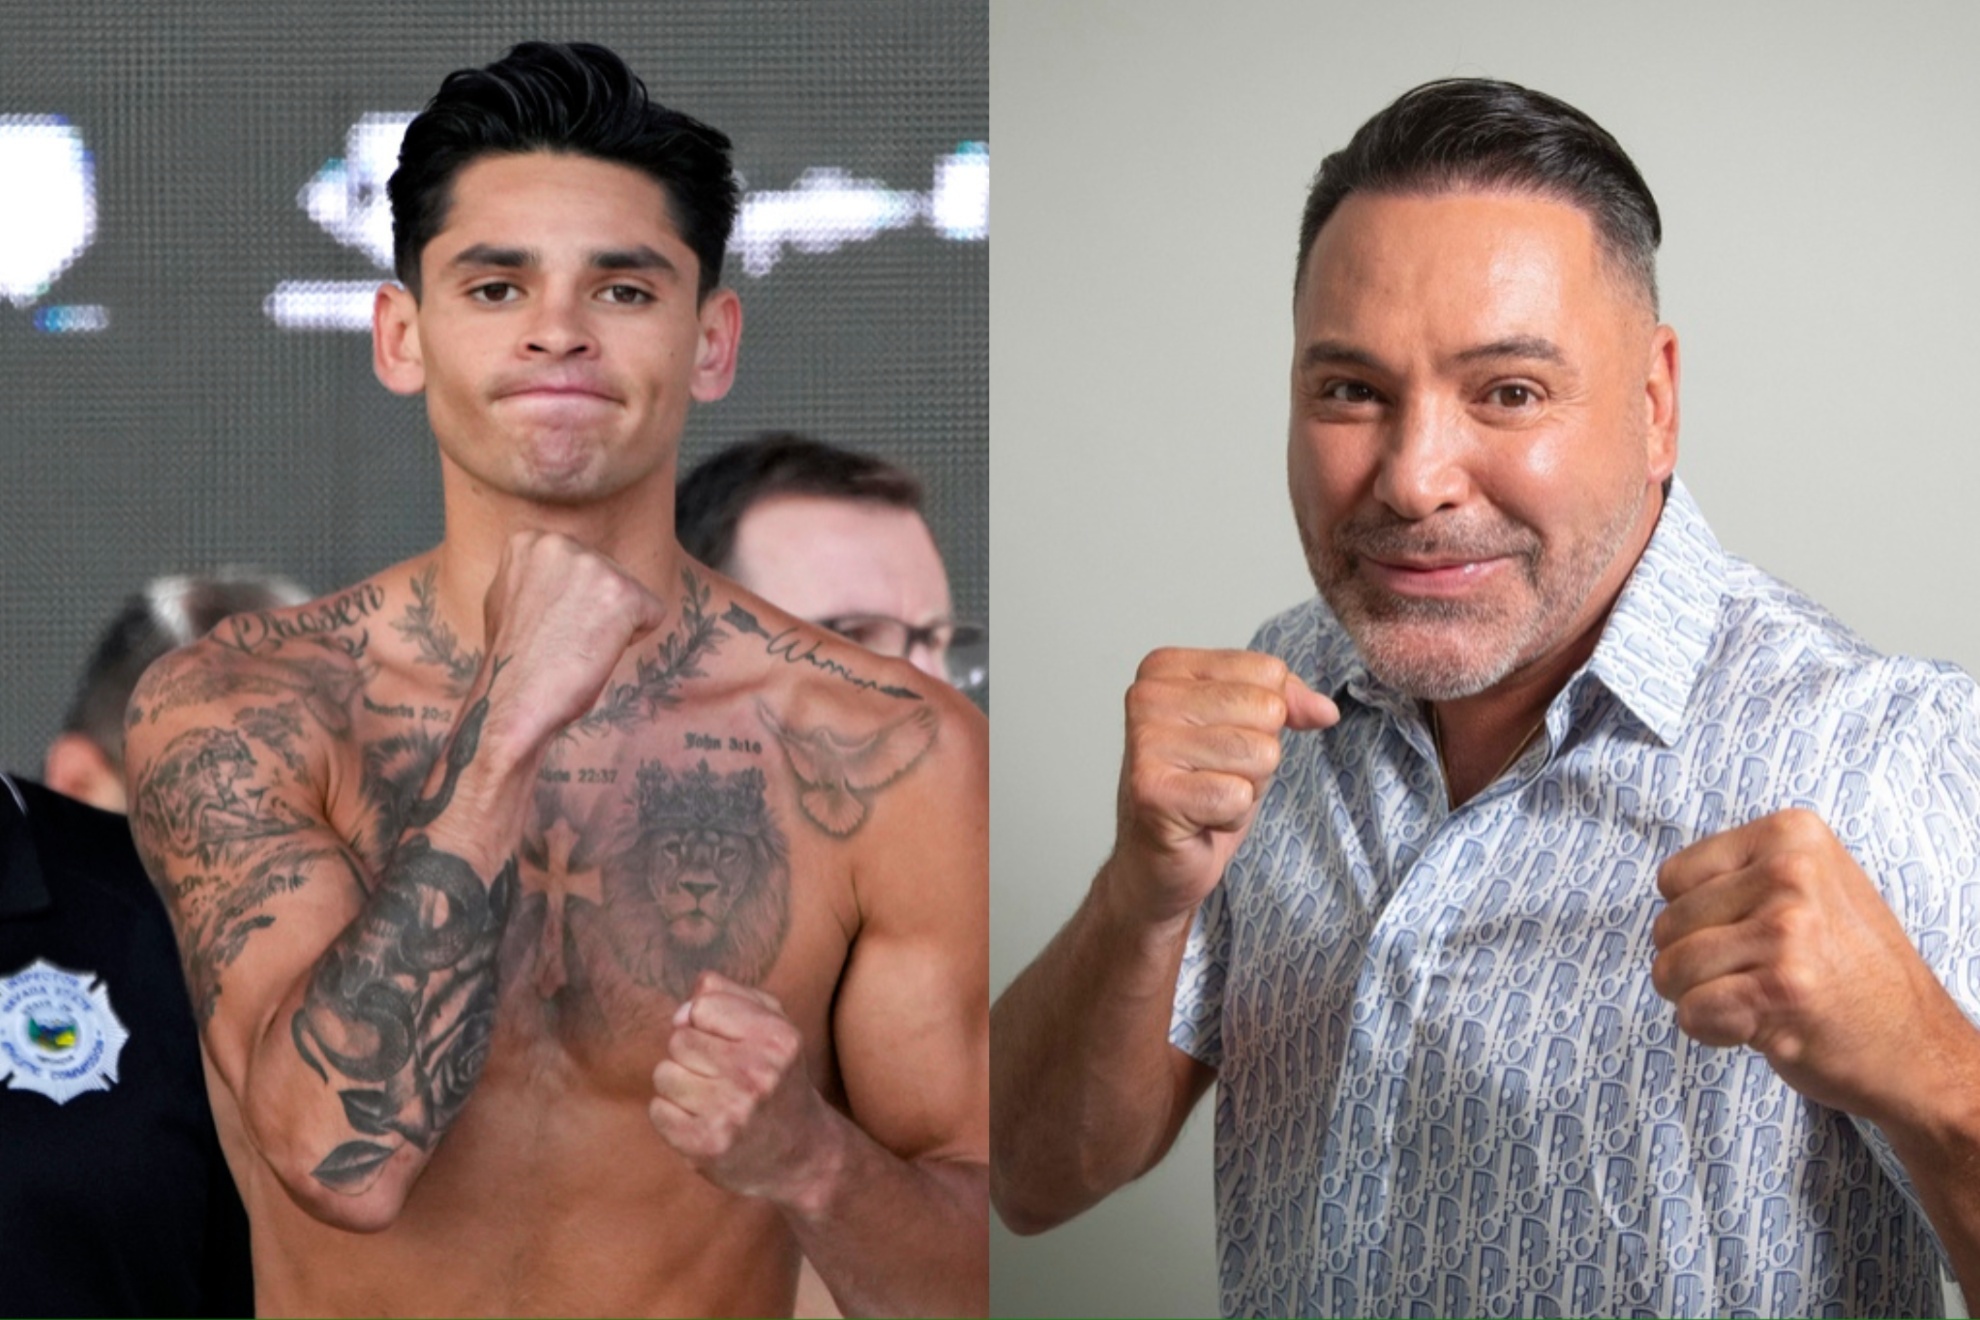 Ryan Garcia assured his social media followers he thought the fight against Rolando Romero was confir